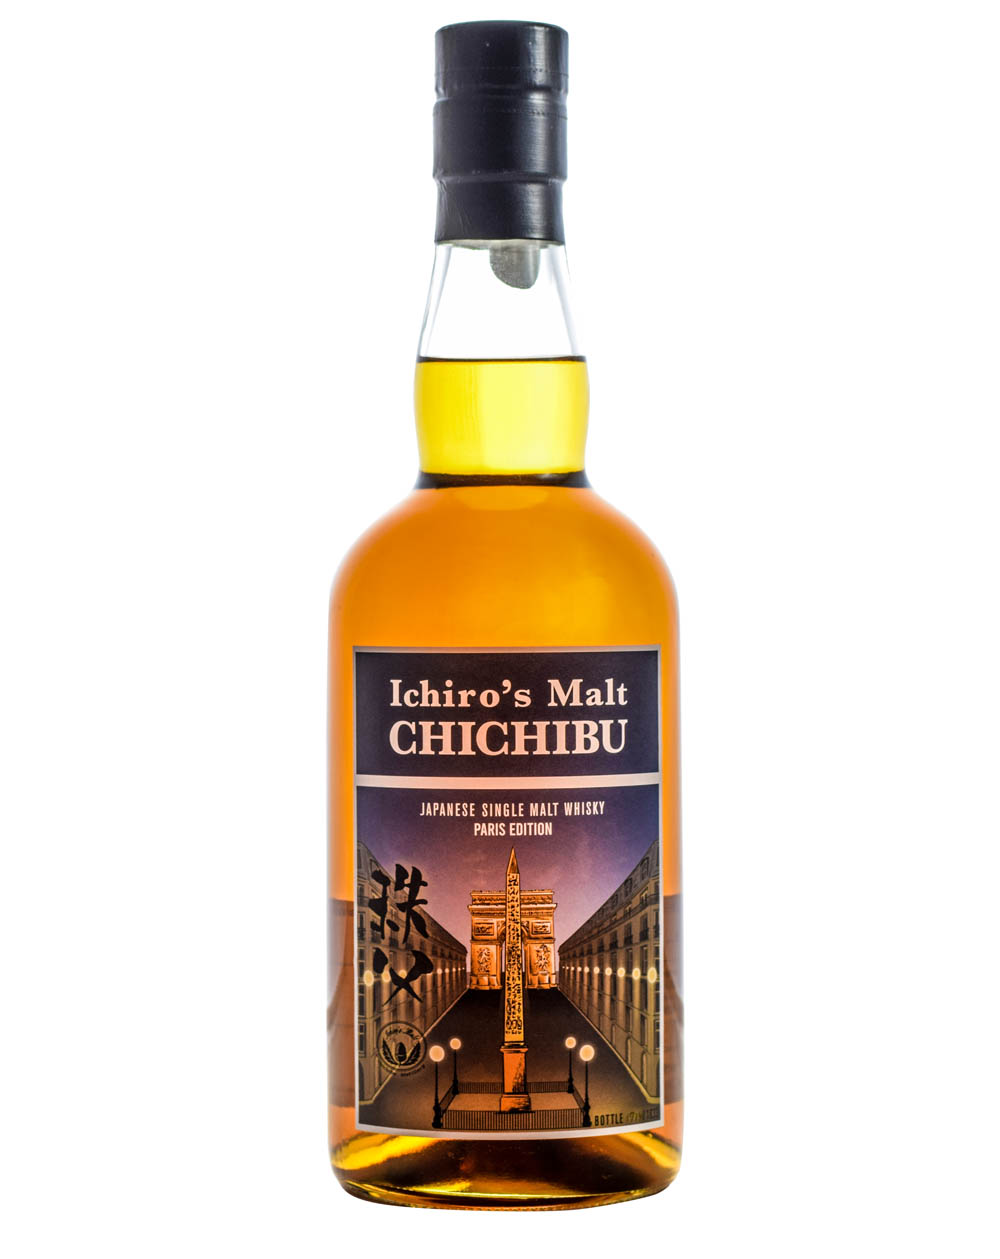 Ichiro’s Malt Chichibu Paris 2020 Edition Musthave Malts MHM